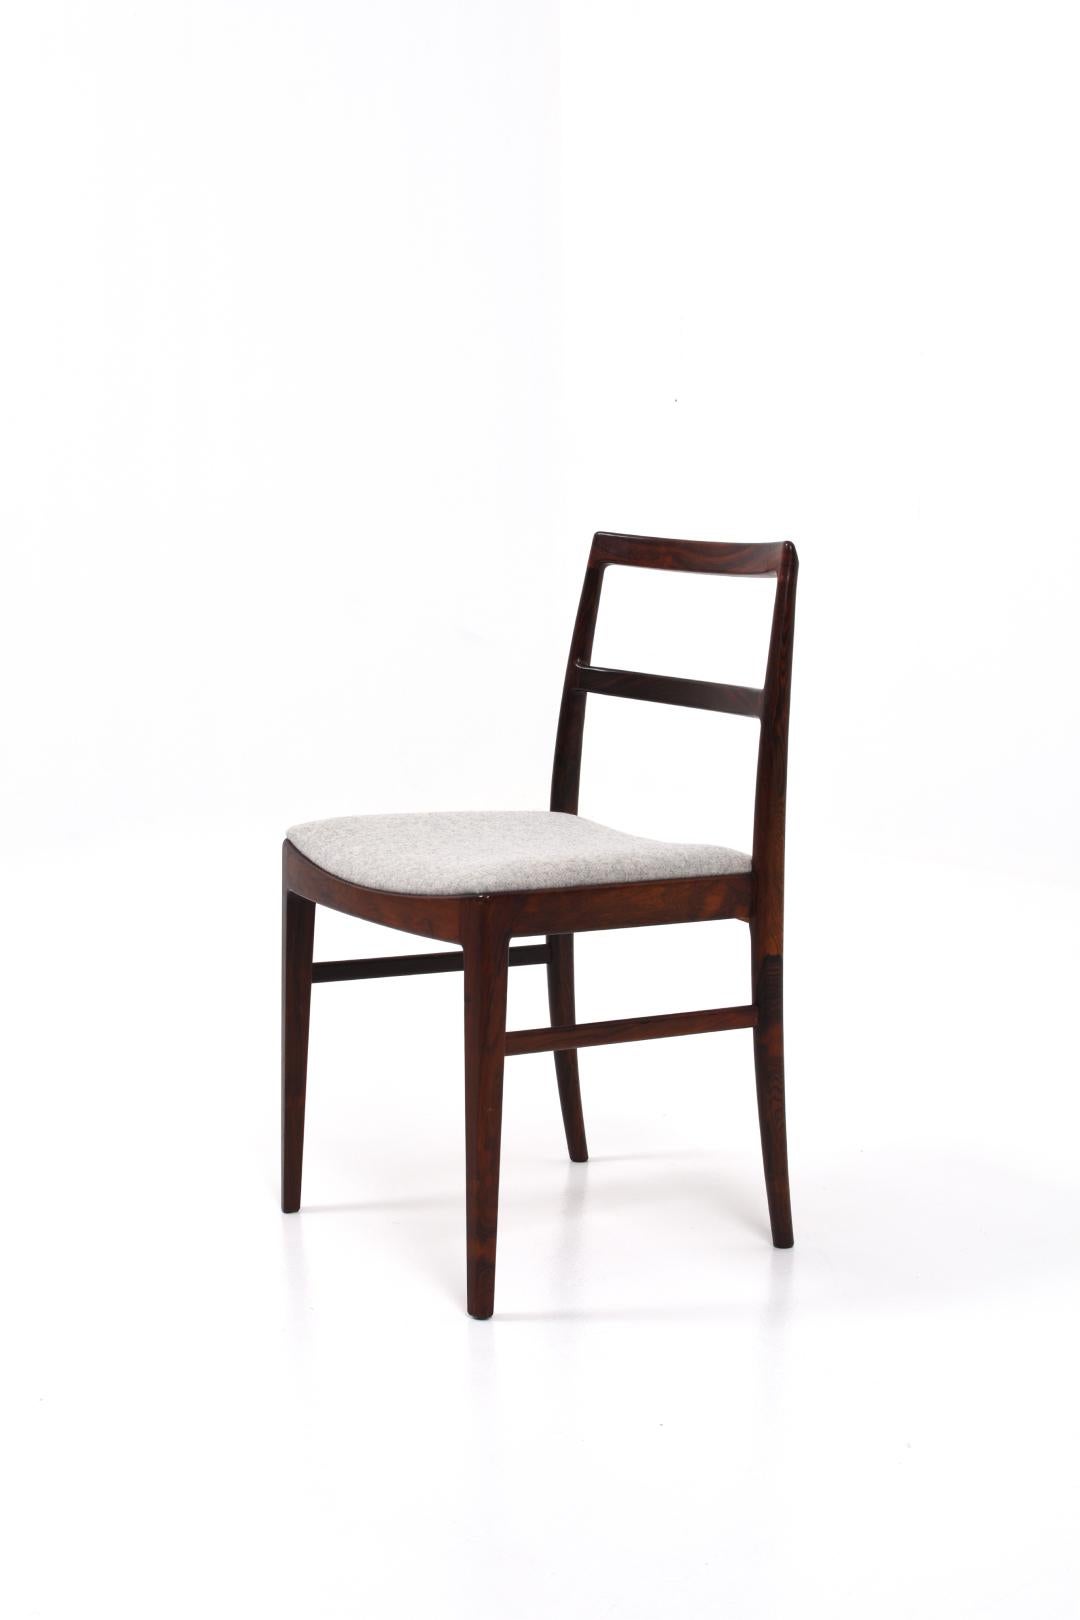 Mid-20th Century Arne Vodder Model 430 Dining Chairs for Sibast Møbler, set of 4 For Sale